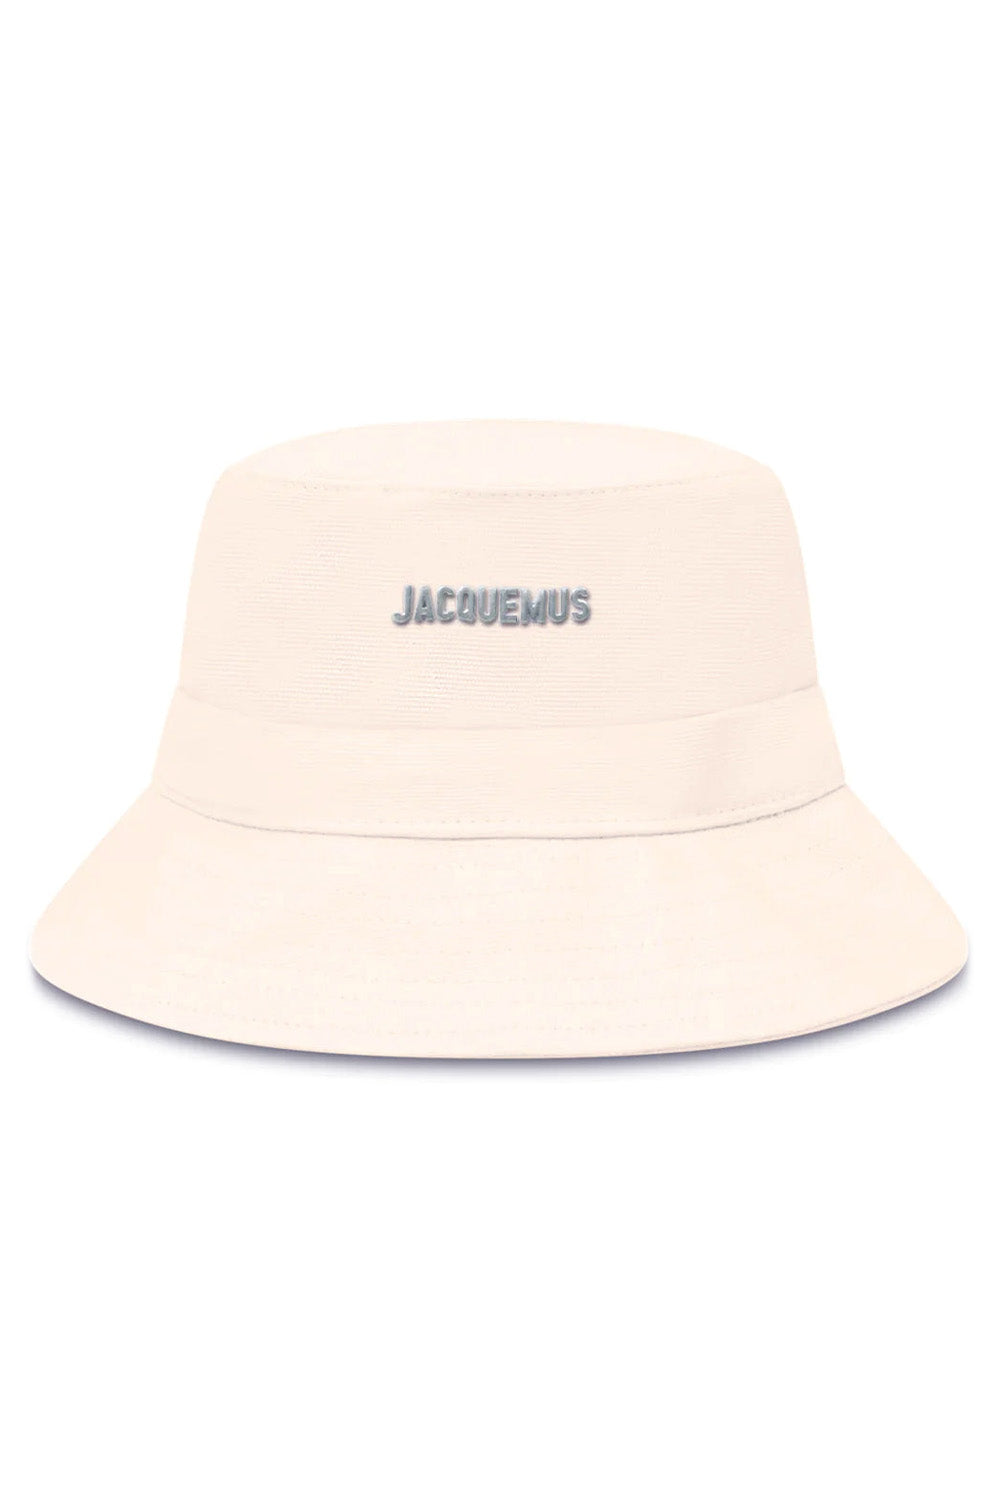 JACQUEMUS HATS LE BOB GADJO HAT | OFF WHITE